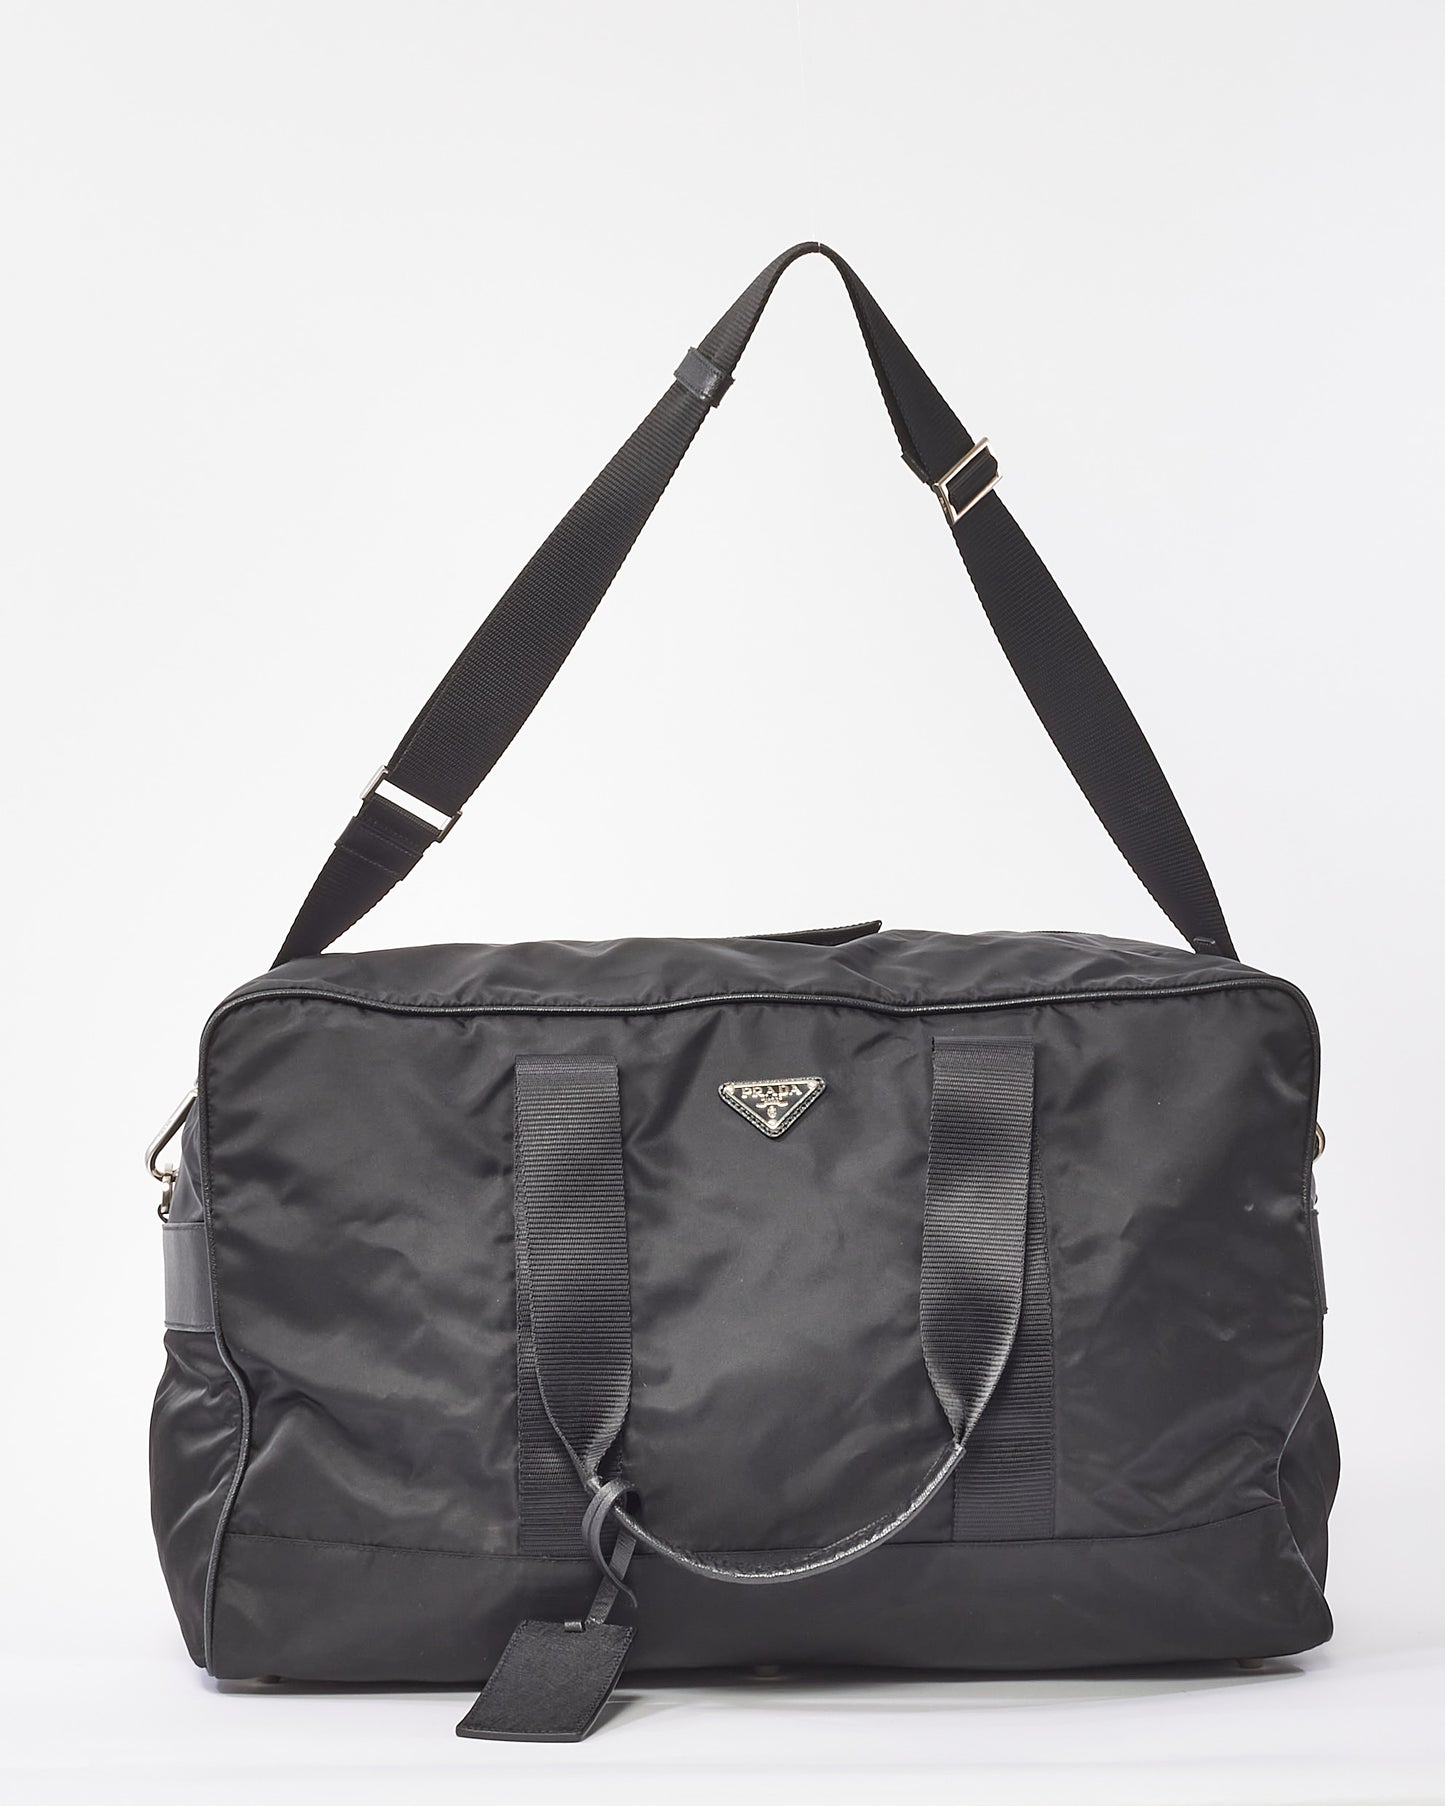 Prada Black Nylon Large Travel Duffle Bag